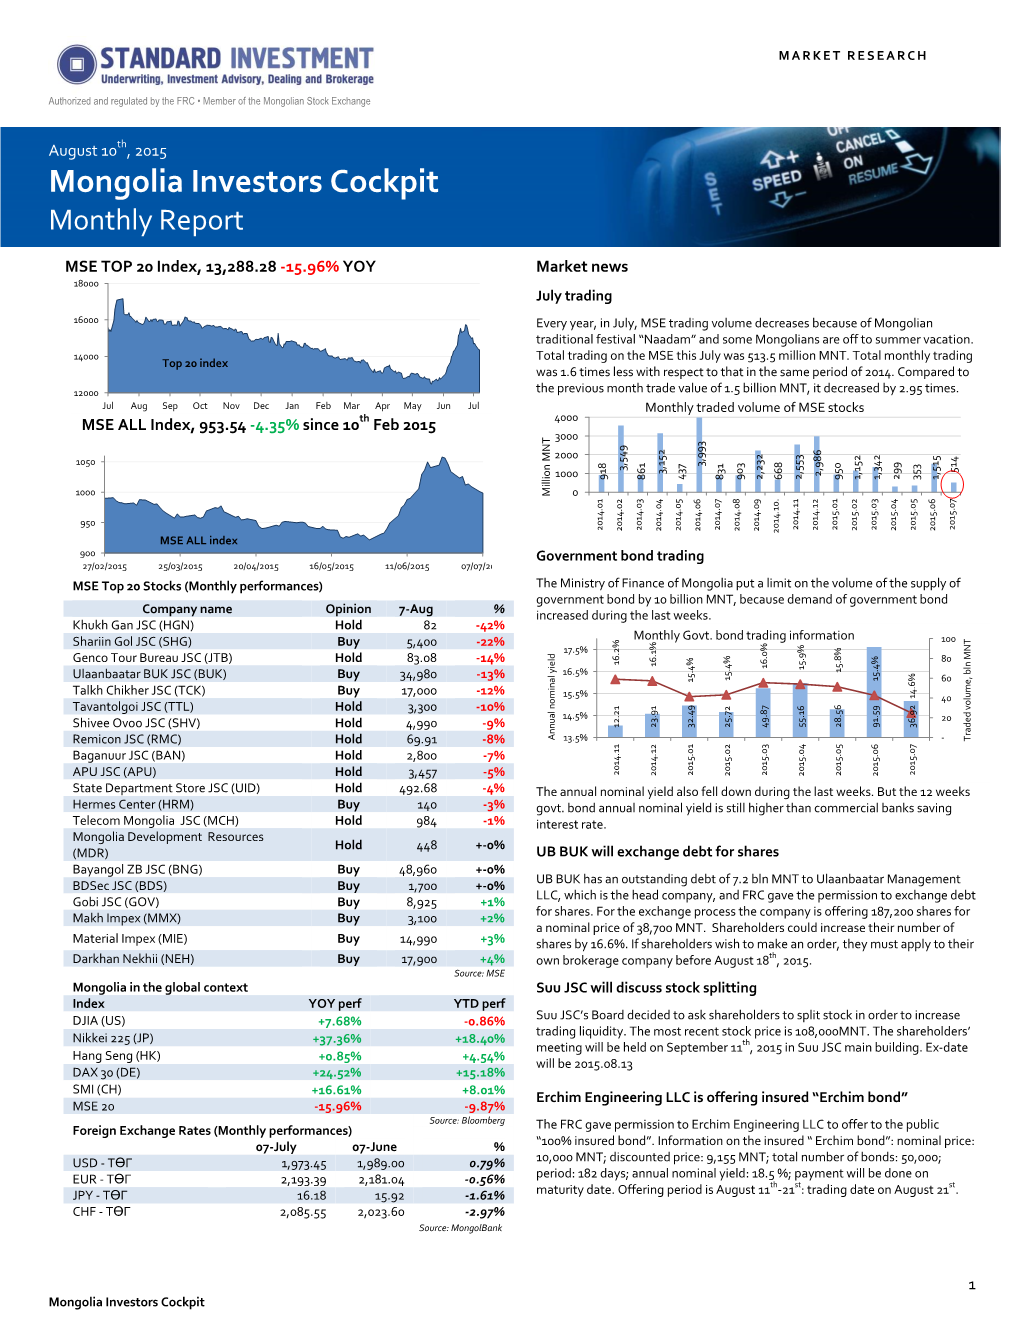 Mongolia Investors Cockpit Monthly Report